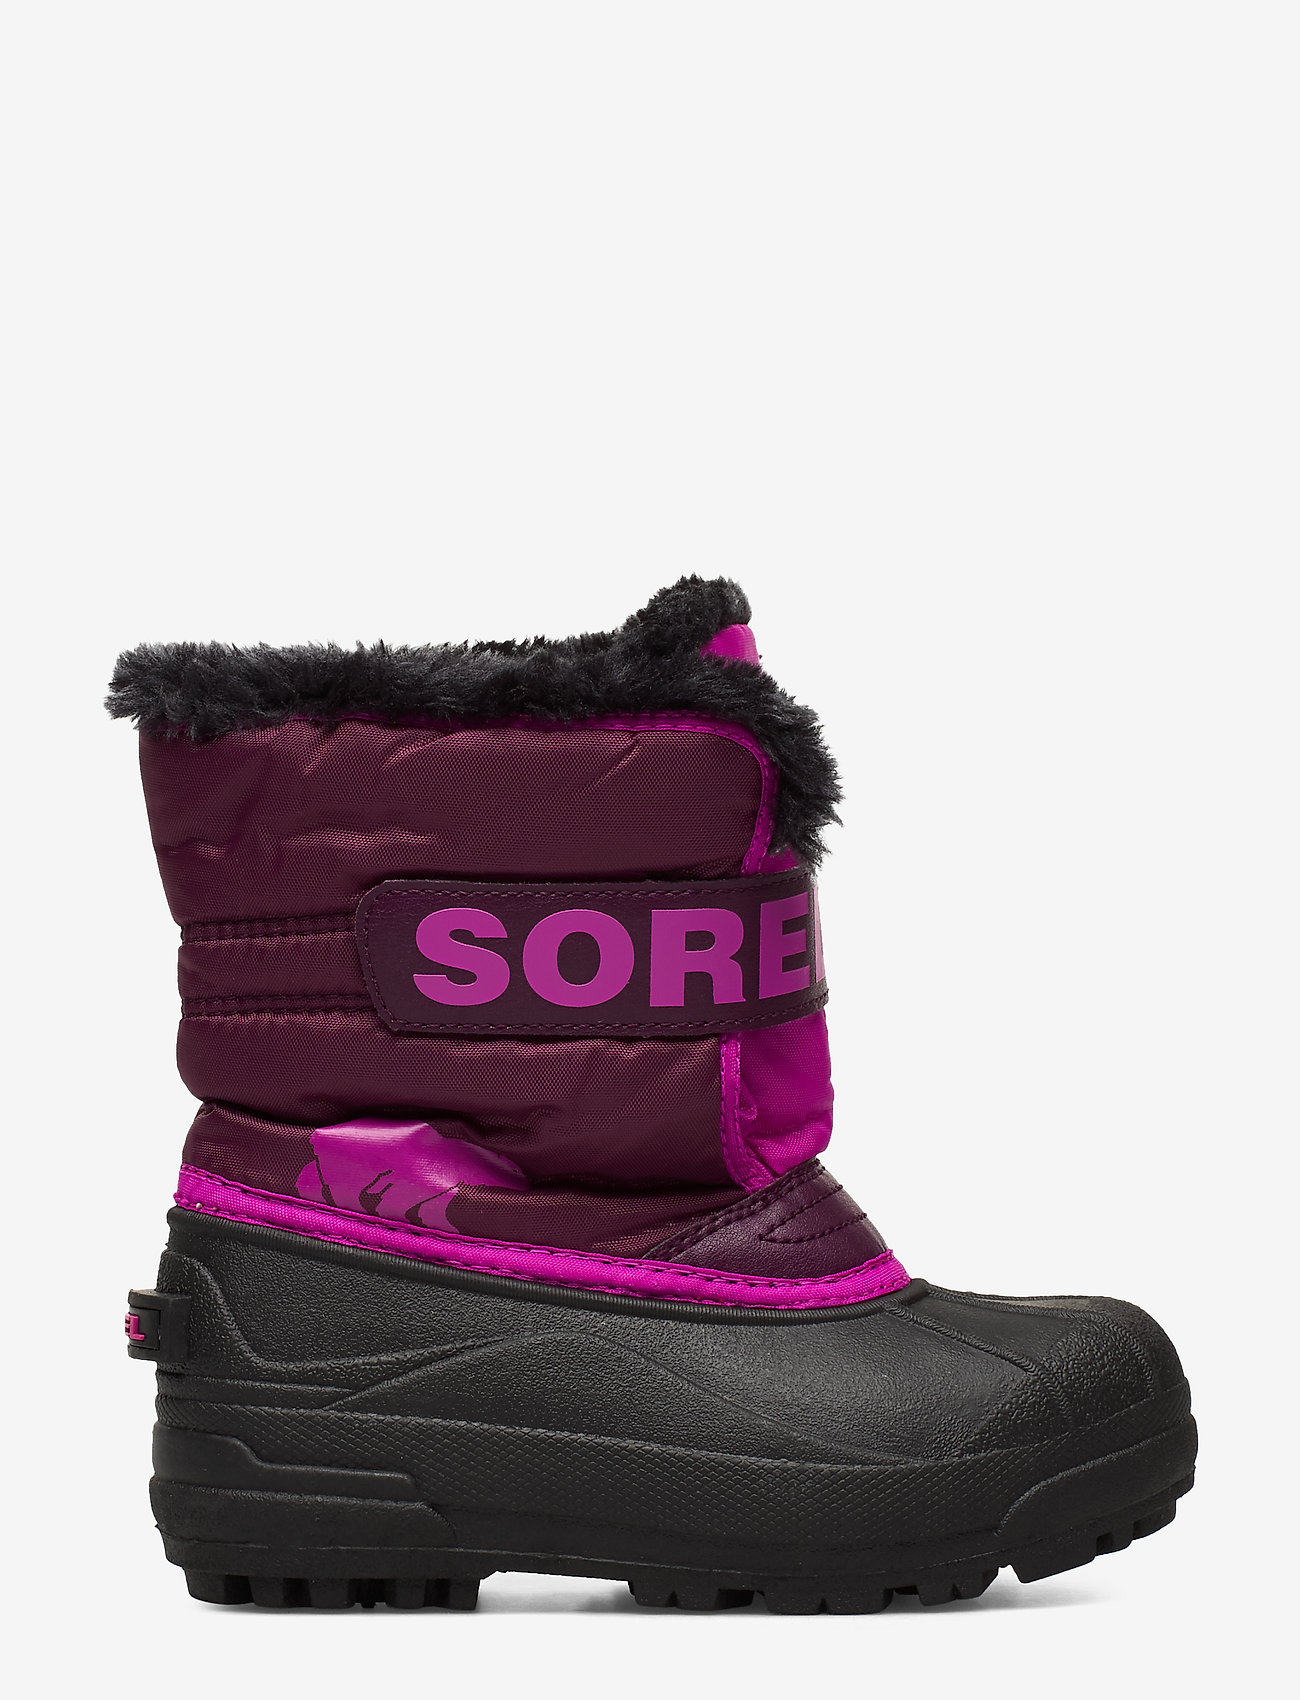 Sorel - CHILDRENS SNOW COMMANDER - vaikams - purple dahlia, groovy pink - 1